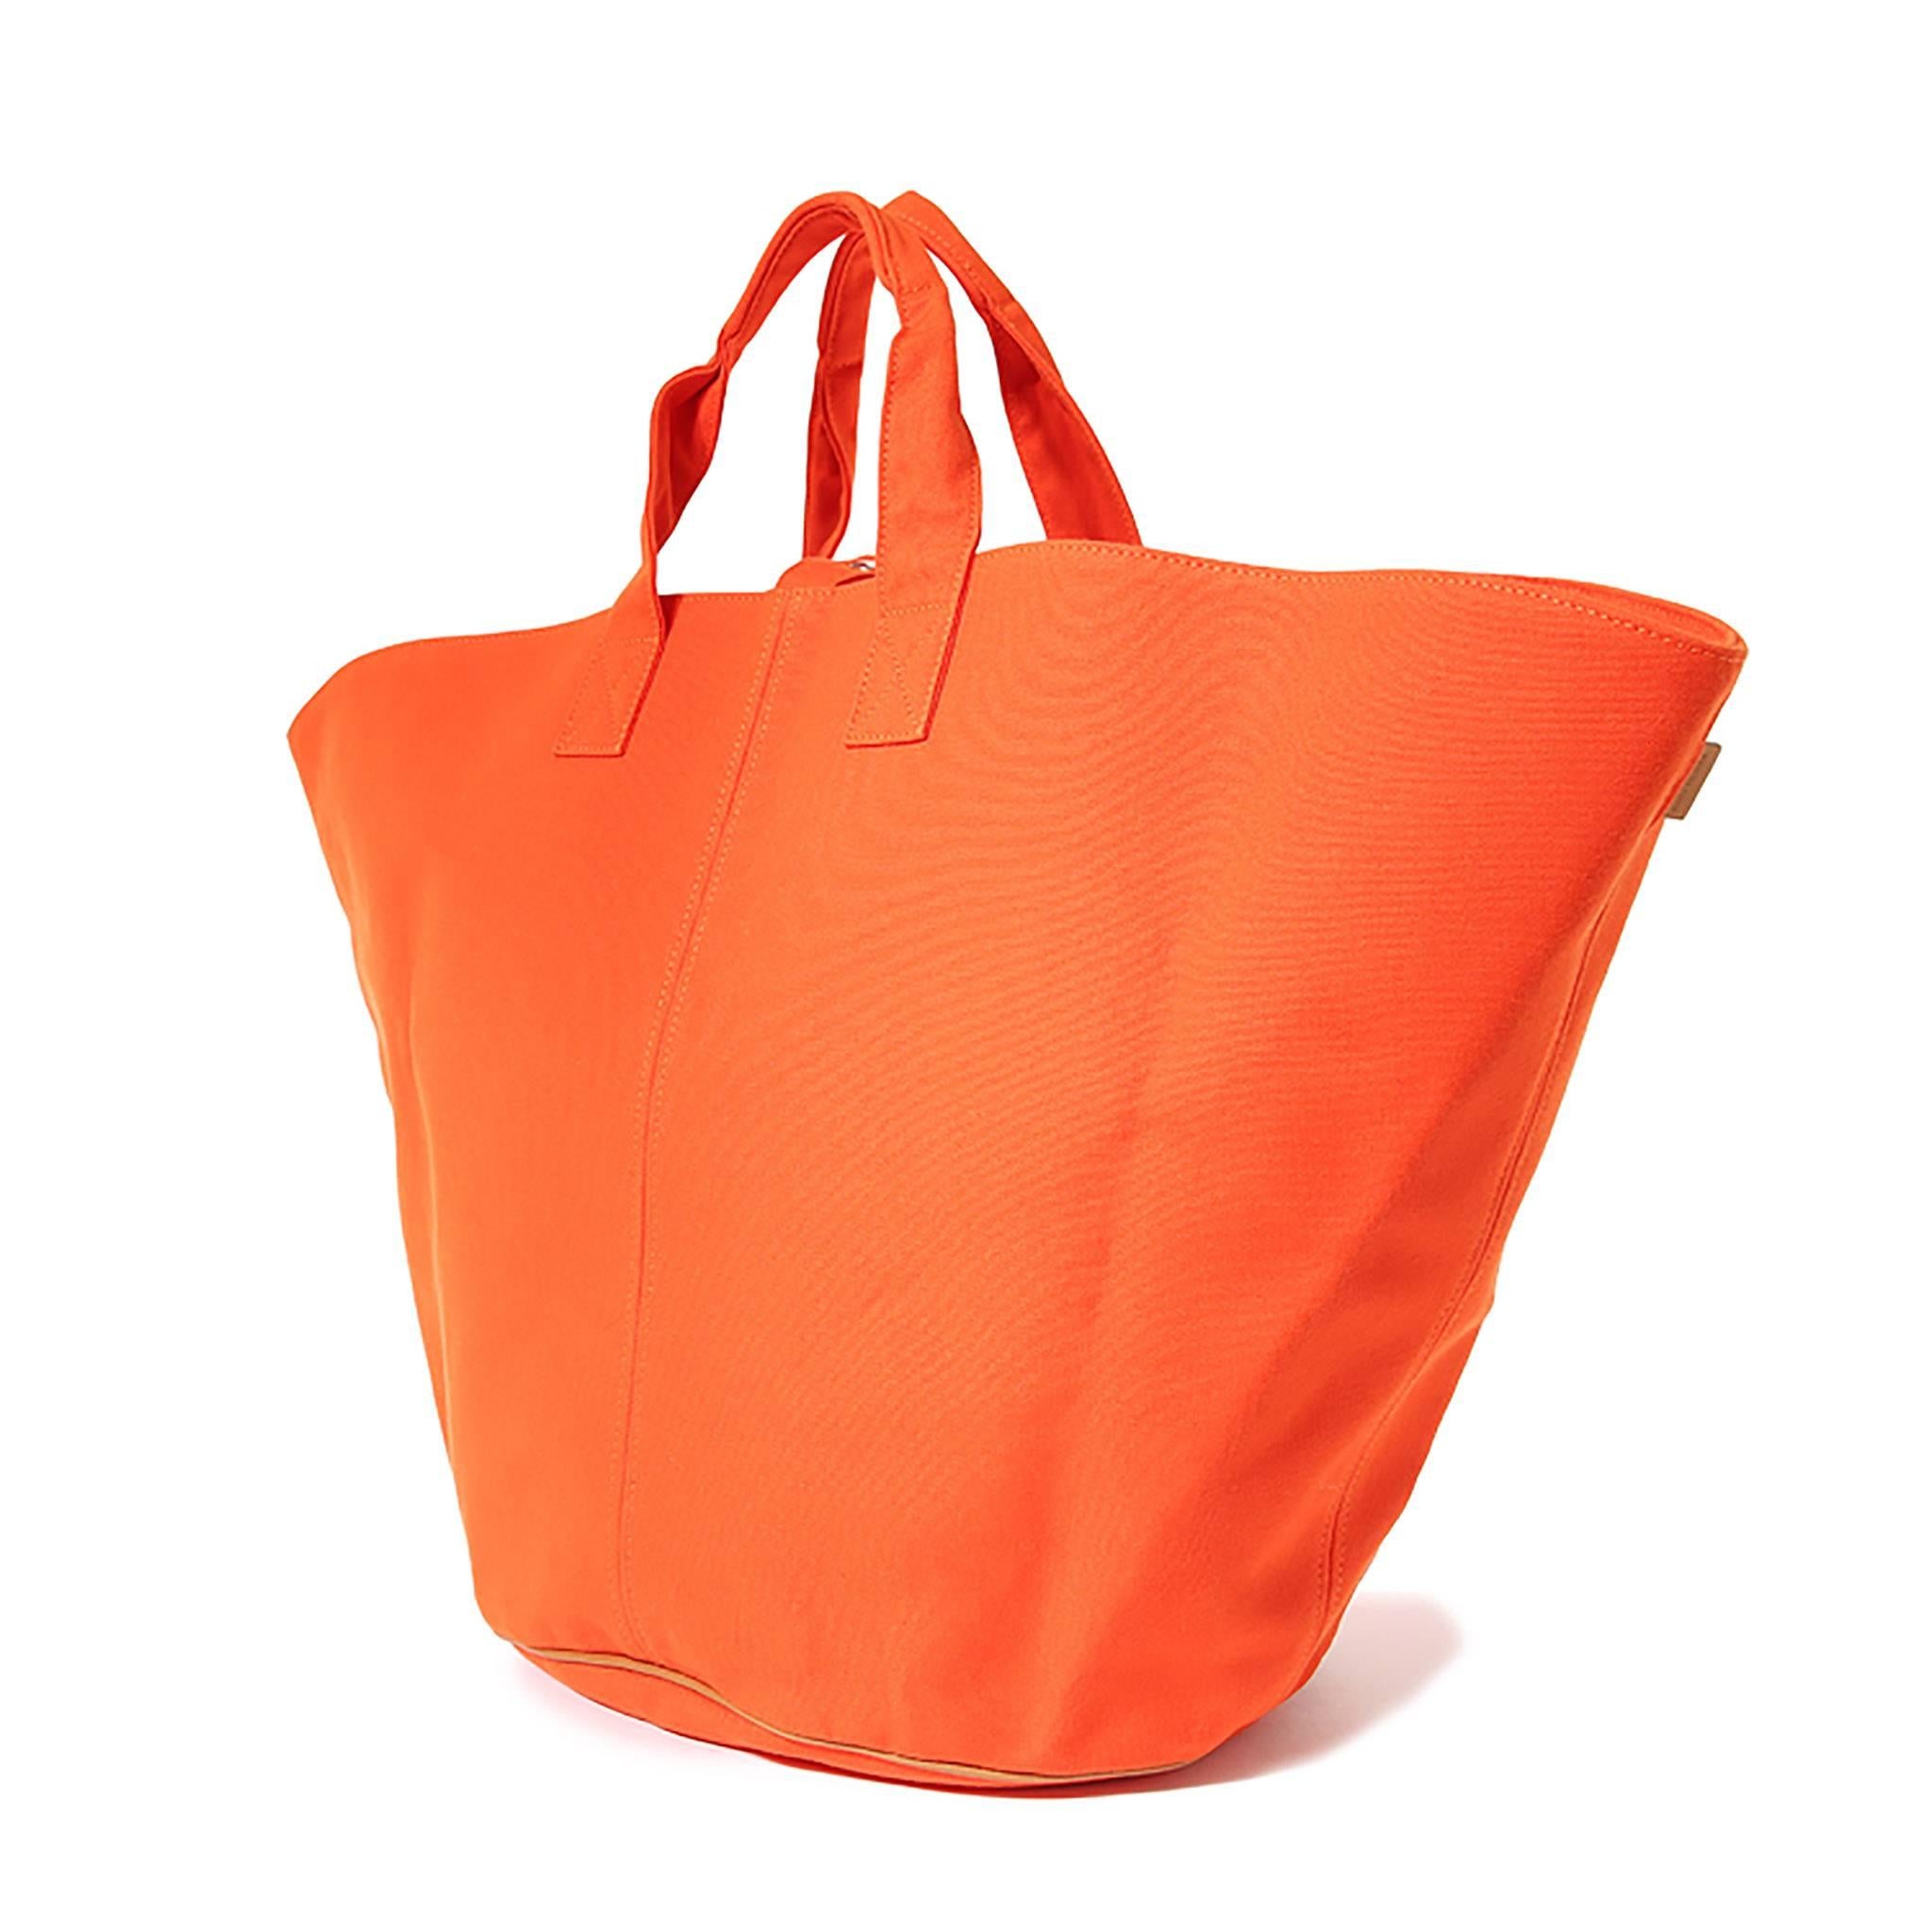 Red Hermes Canvas Shopping Bag Orange